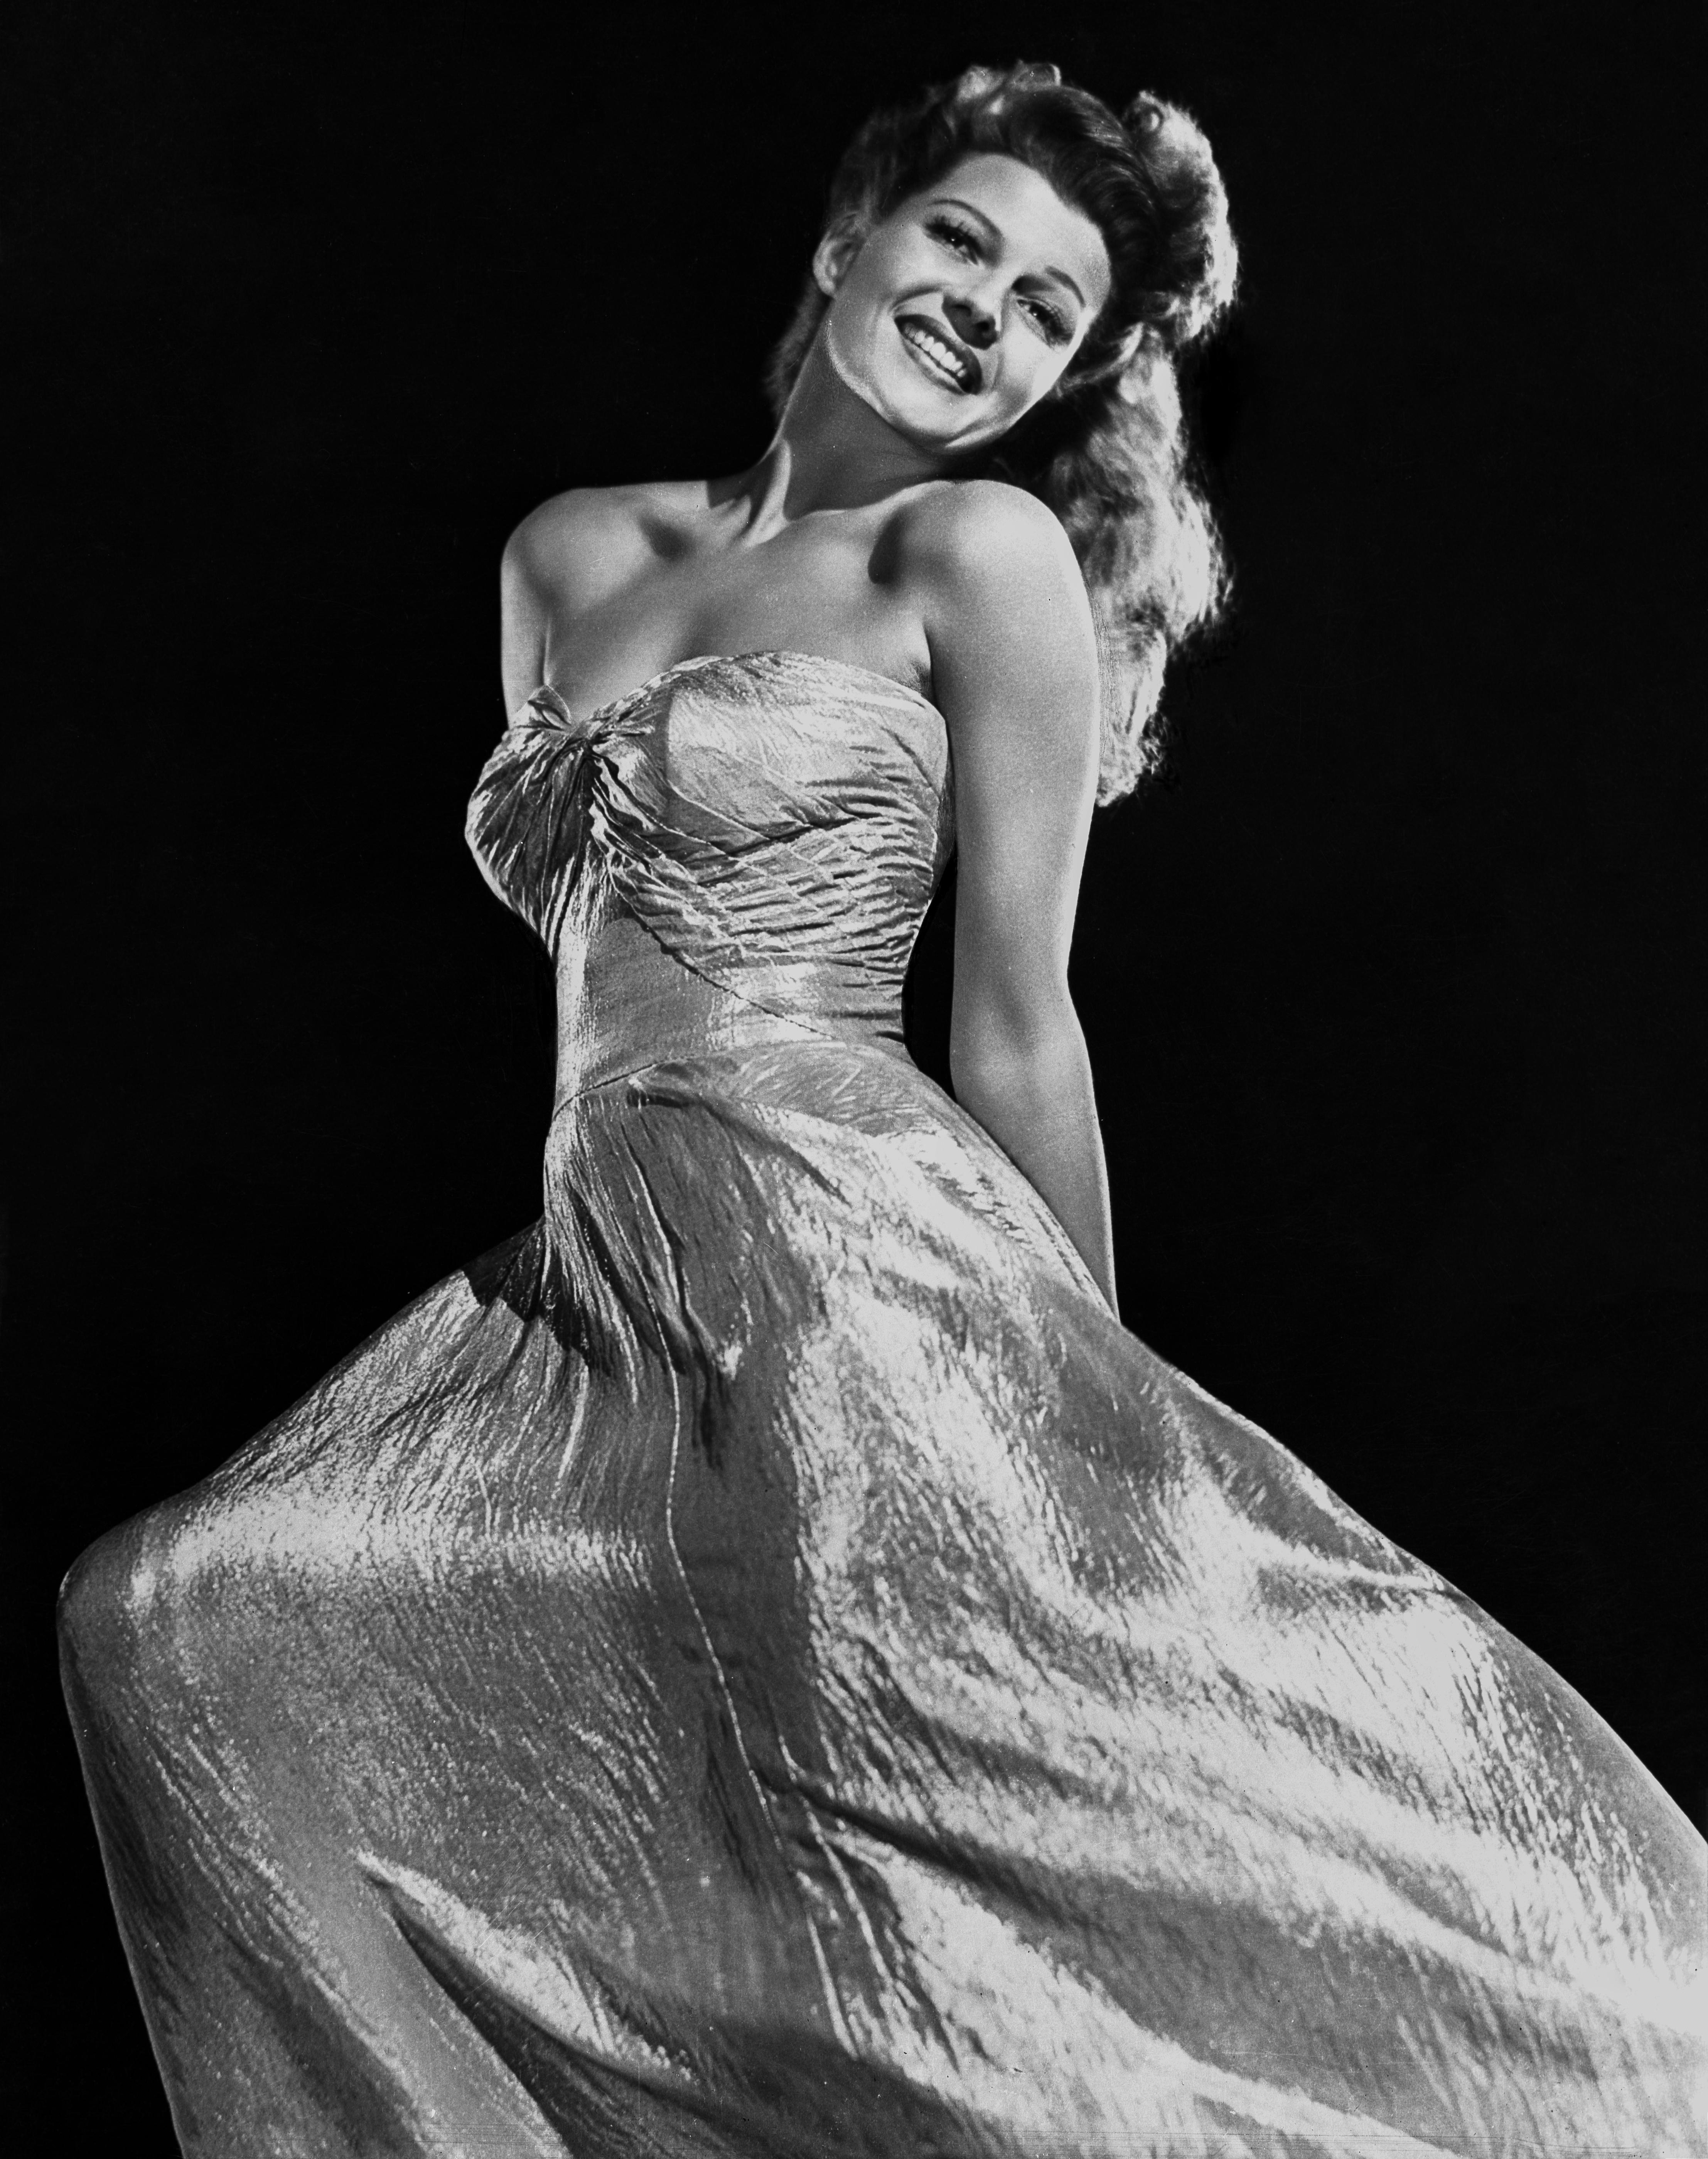 Robert Coburn Portrait Photograph – Rita Hayworth Smiling in Gown Fine Art Print